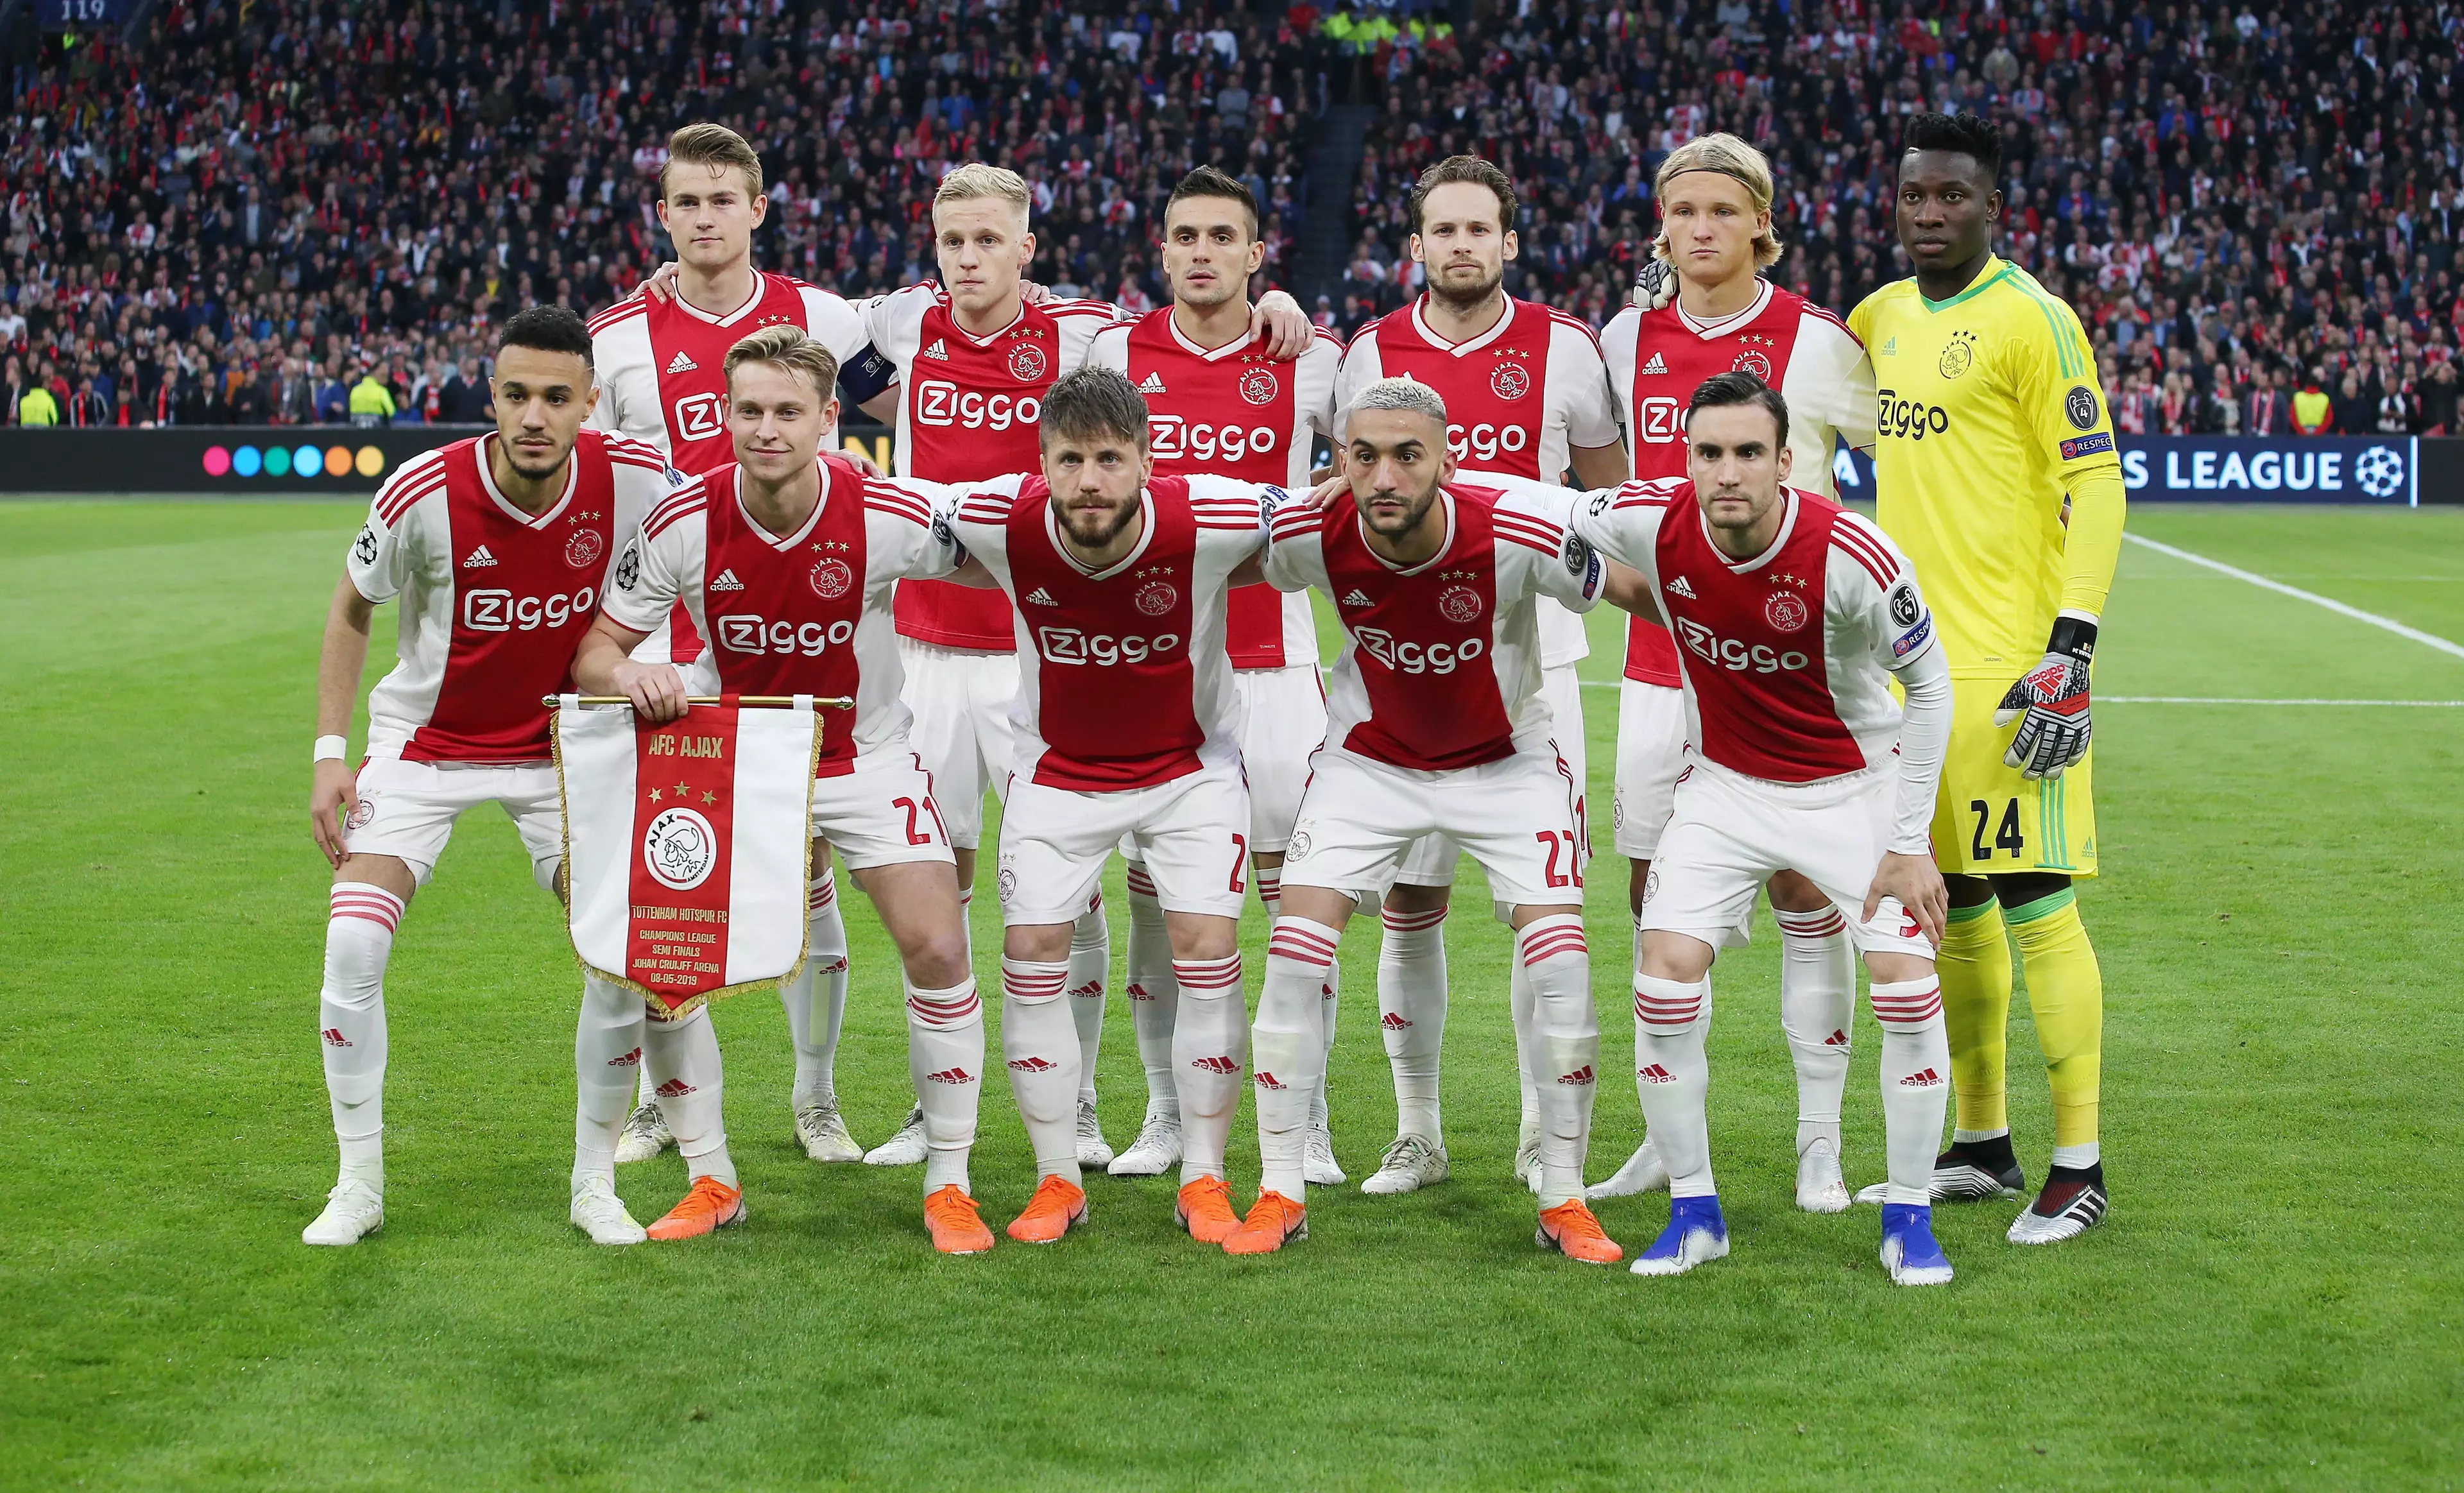 Ajax's line-up for their second leg tie against Spurs last season. (Image